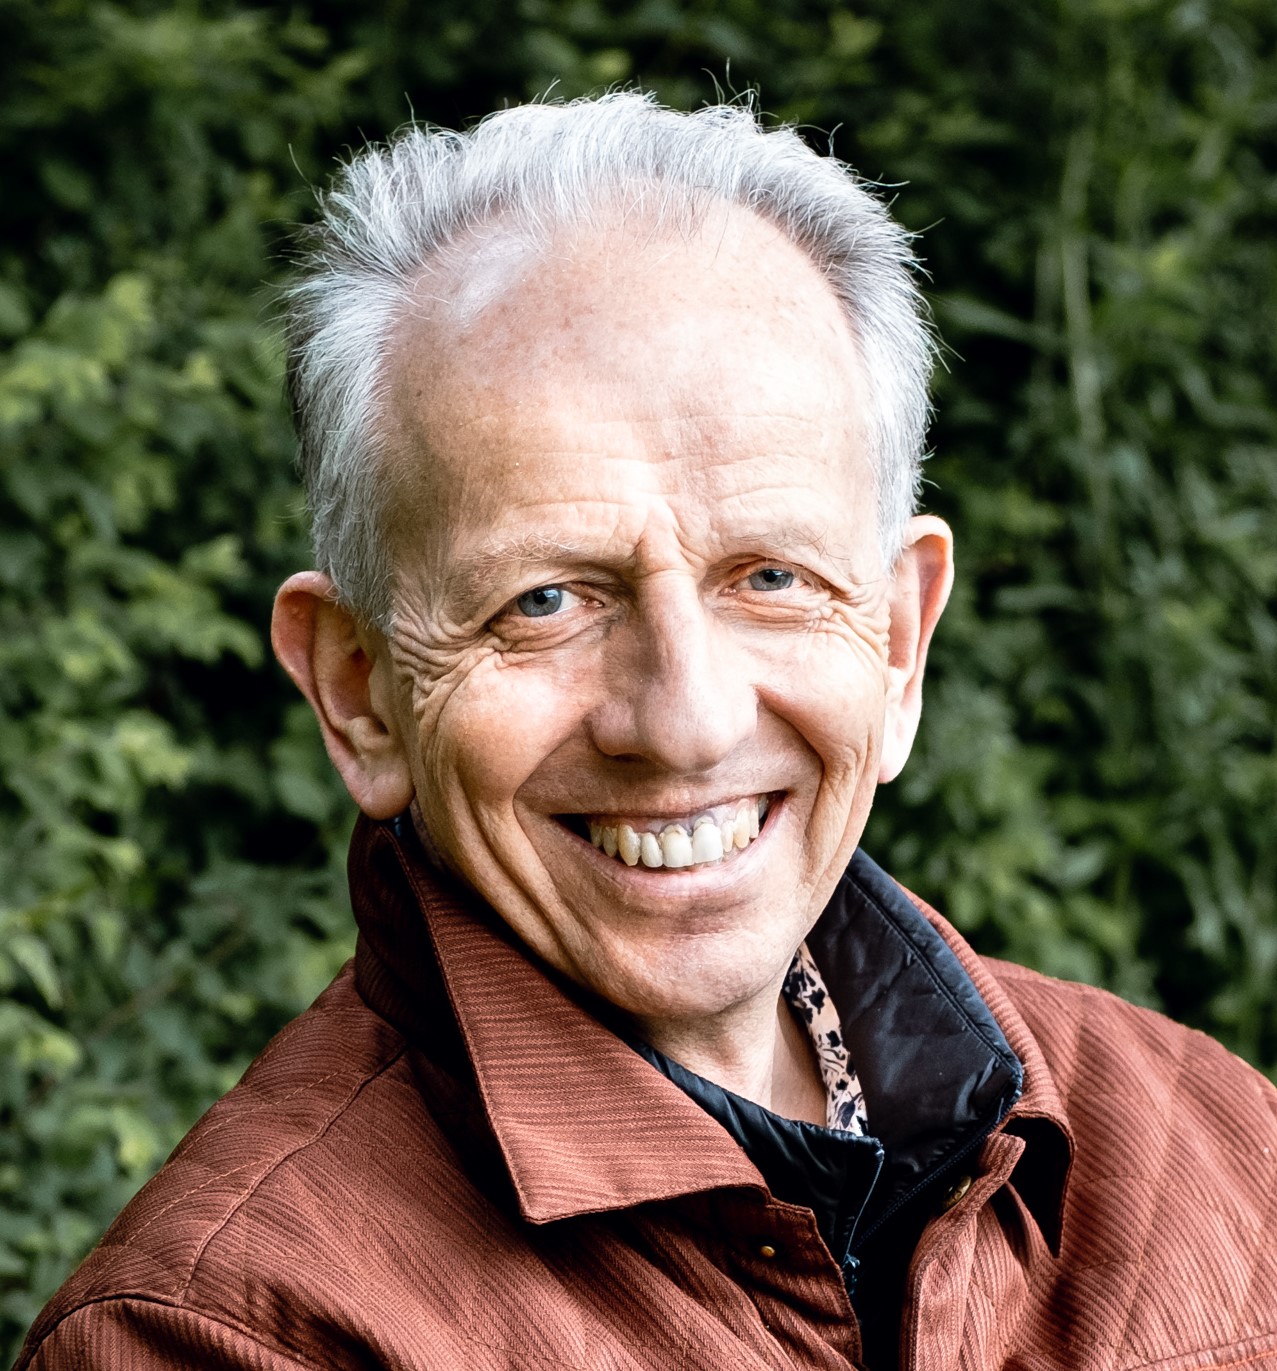 Profile of Professor Richard Jones smiling